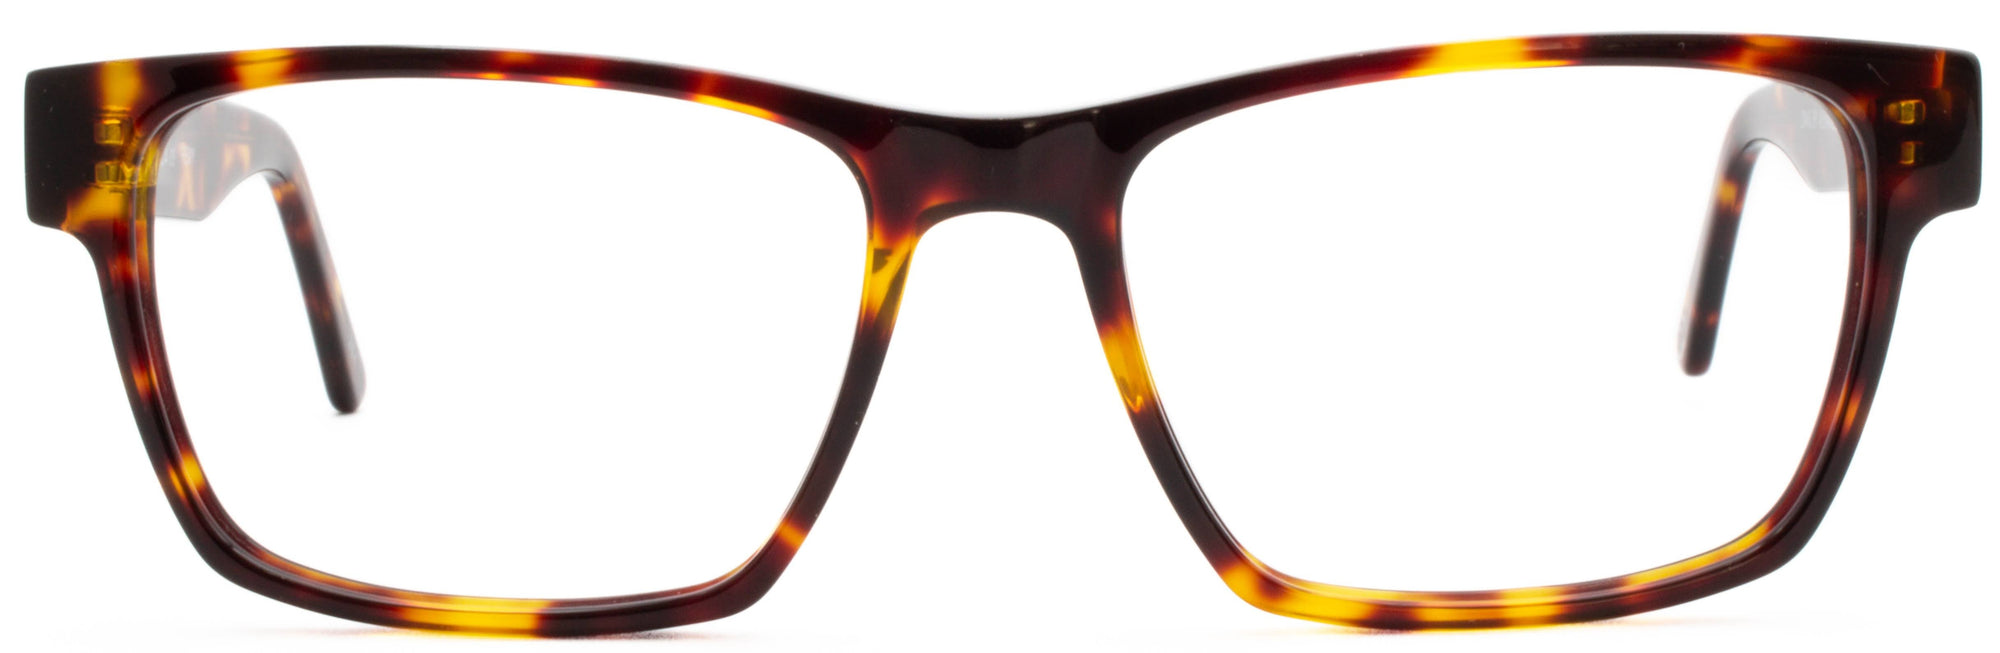 Alexander Daas - Remy Eyeglasses - Light Tortoise - Front View